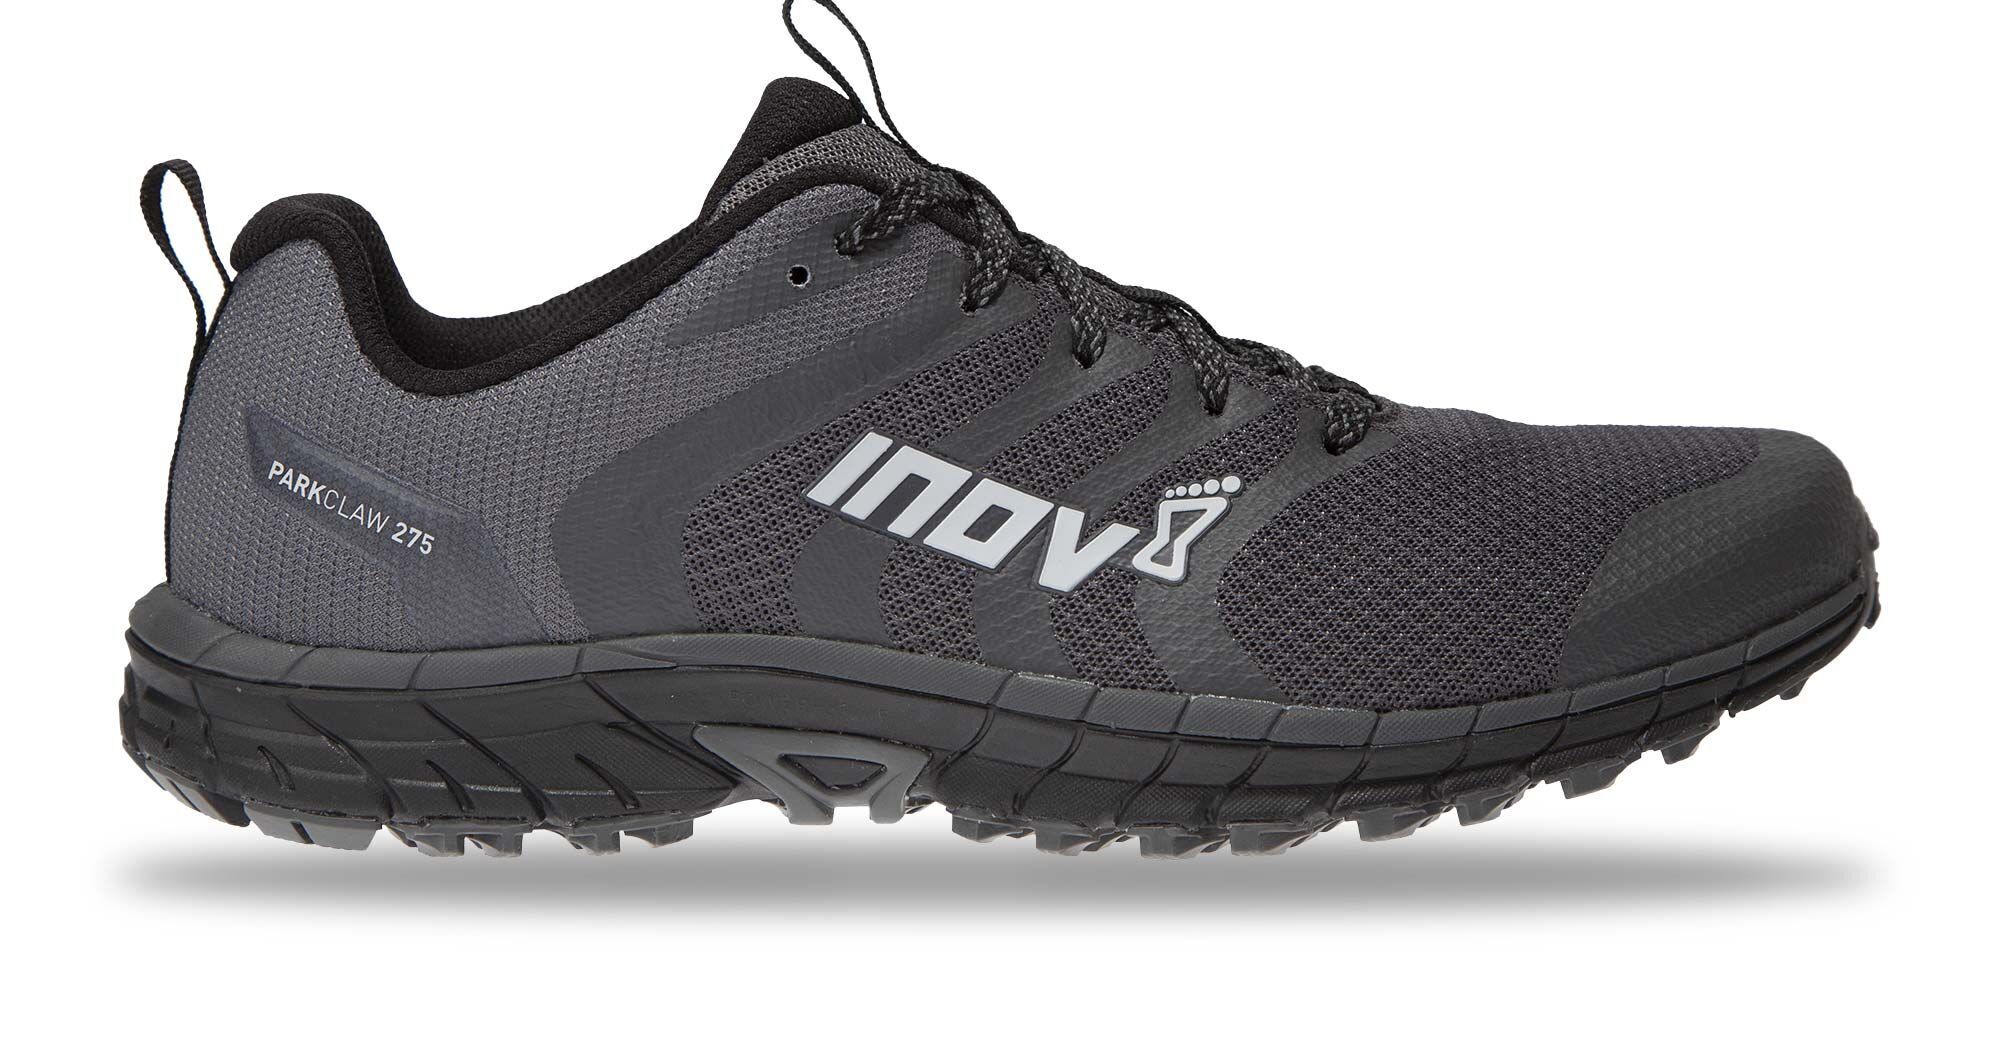 Inov-8 Parkclaw 275 - Trail running shoes - Men's